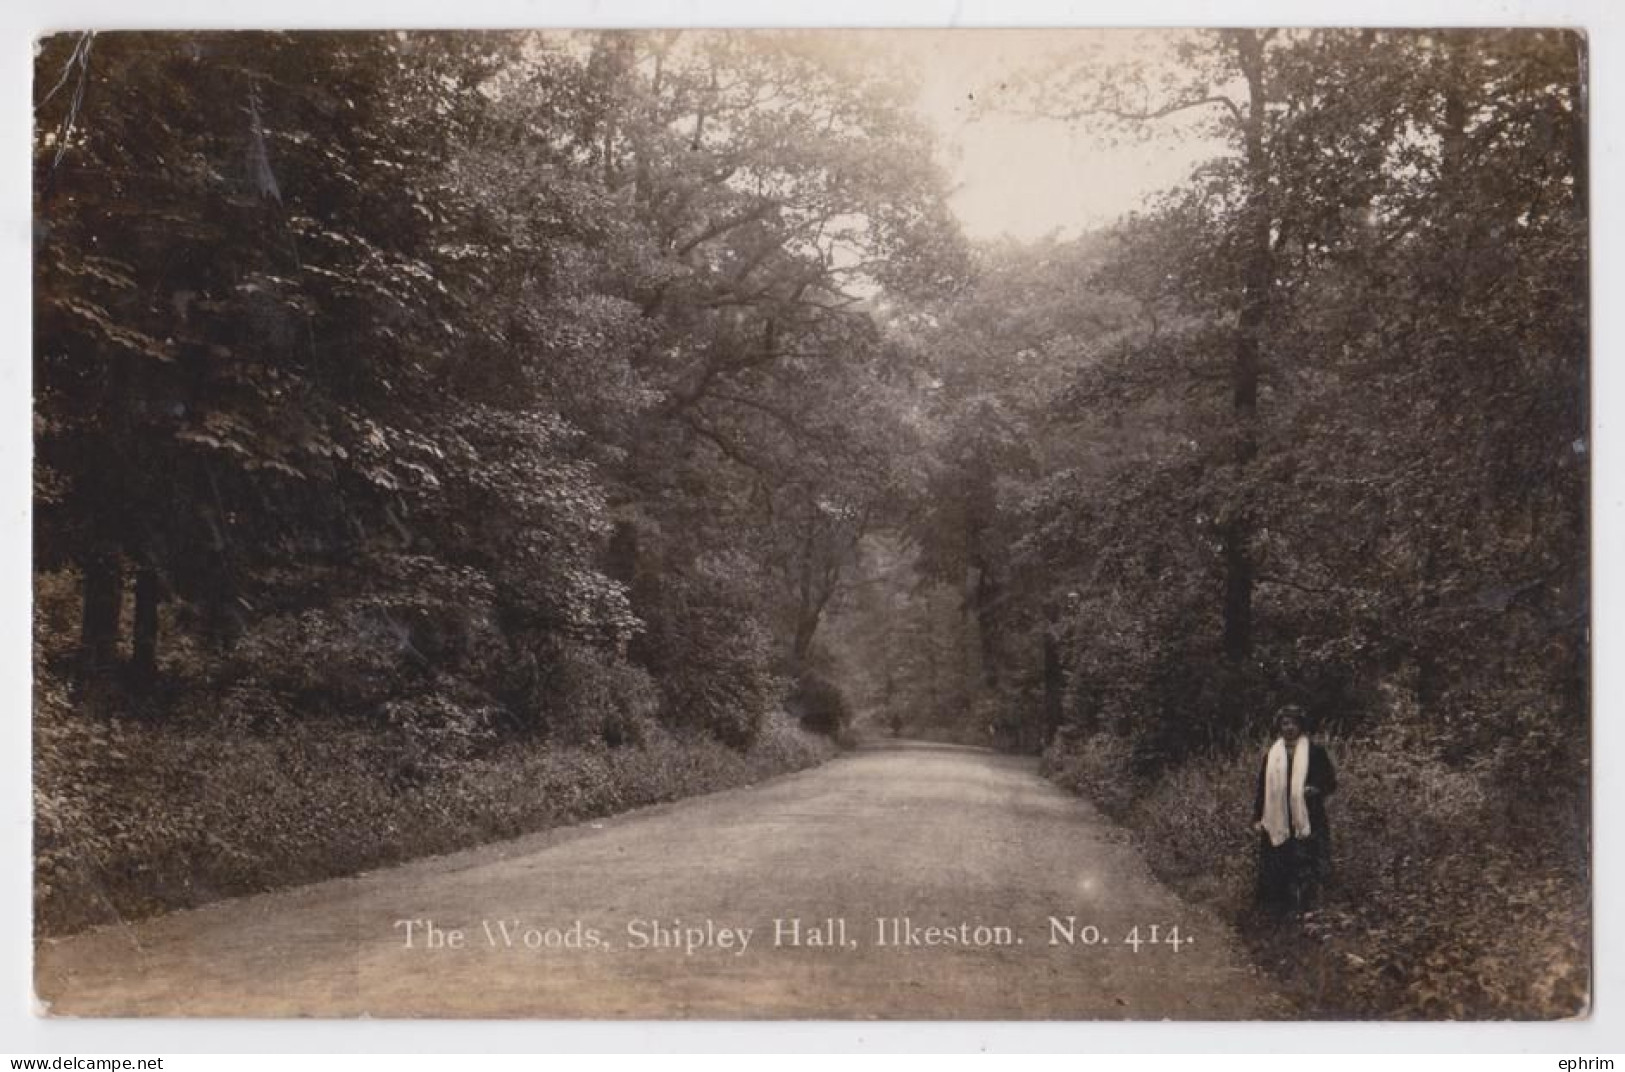 Ilkeston The Woods Shipley Hall Photo Postcard - Derbyshire